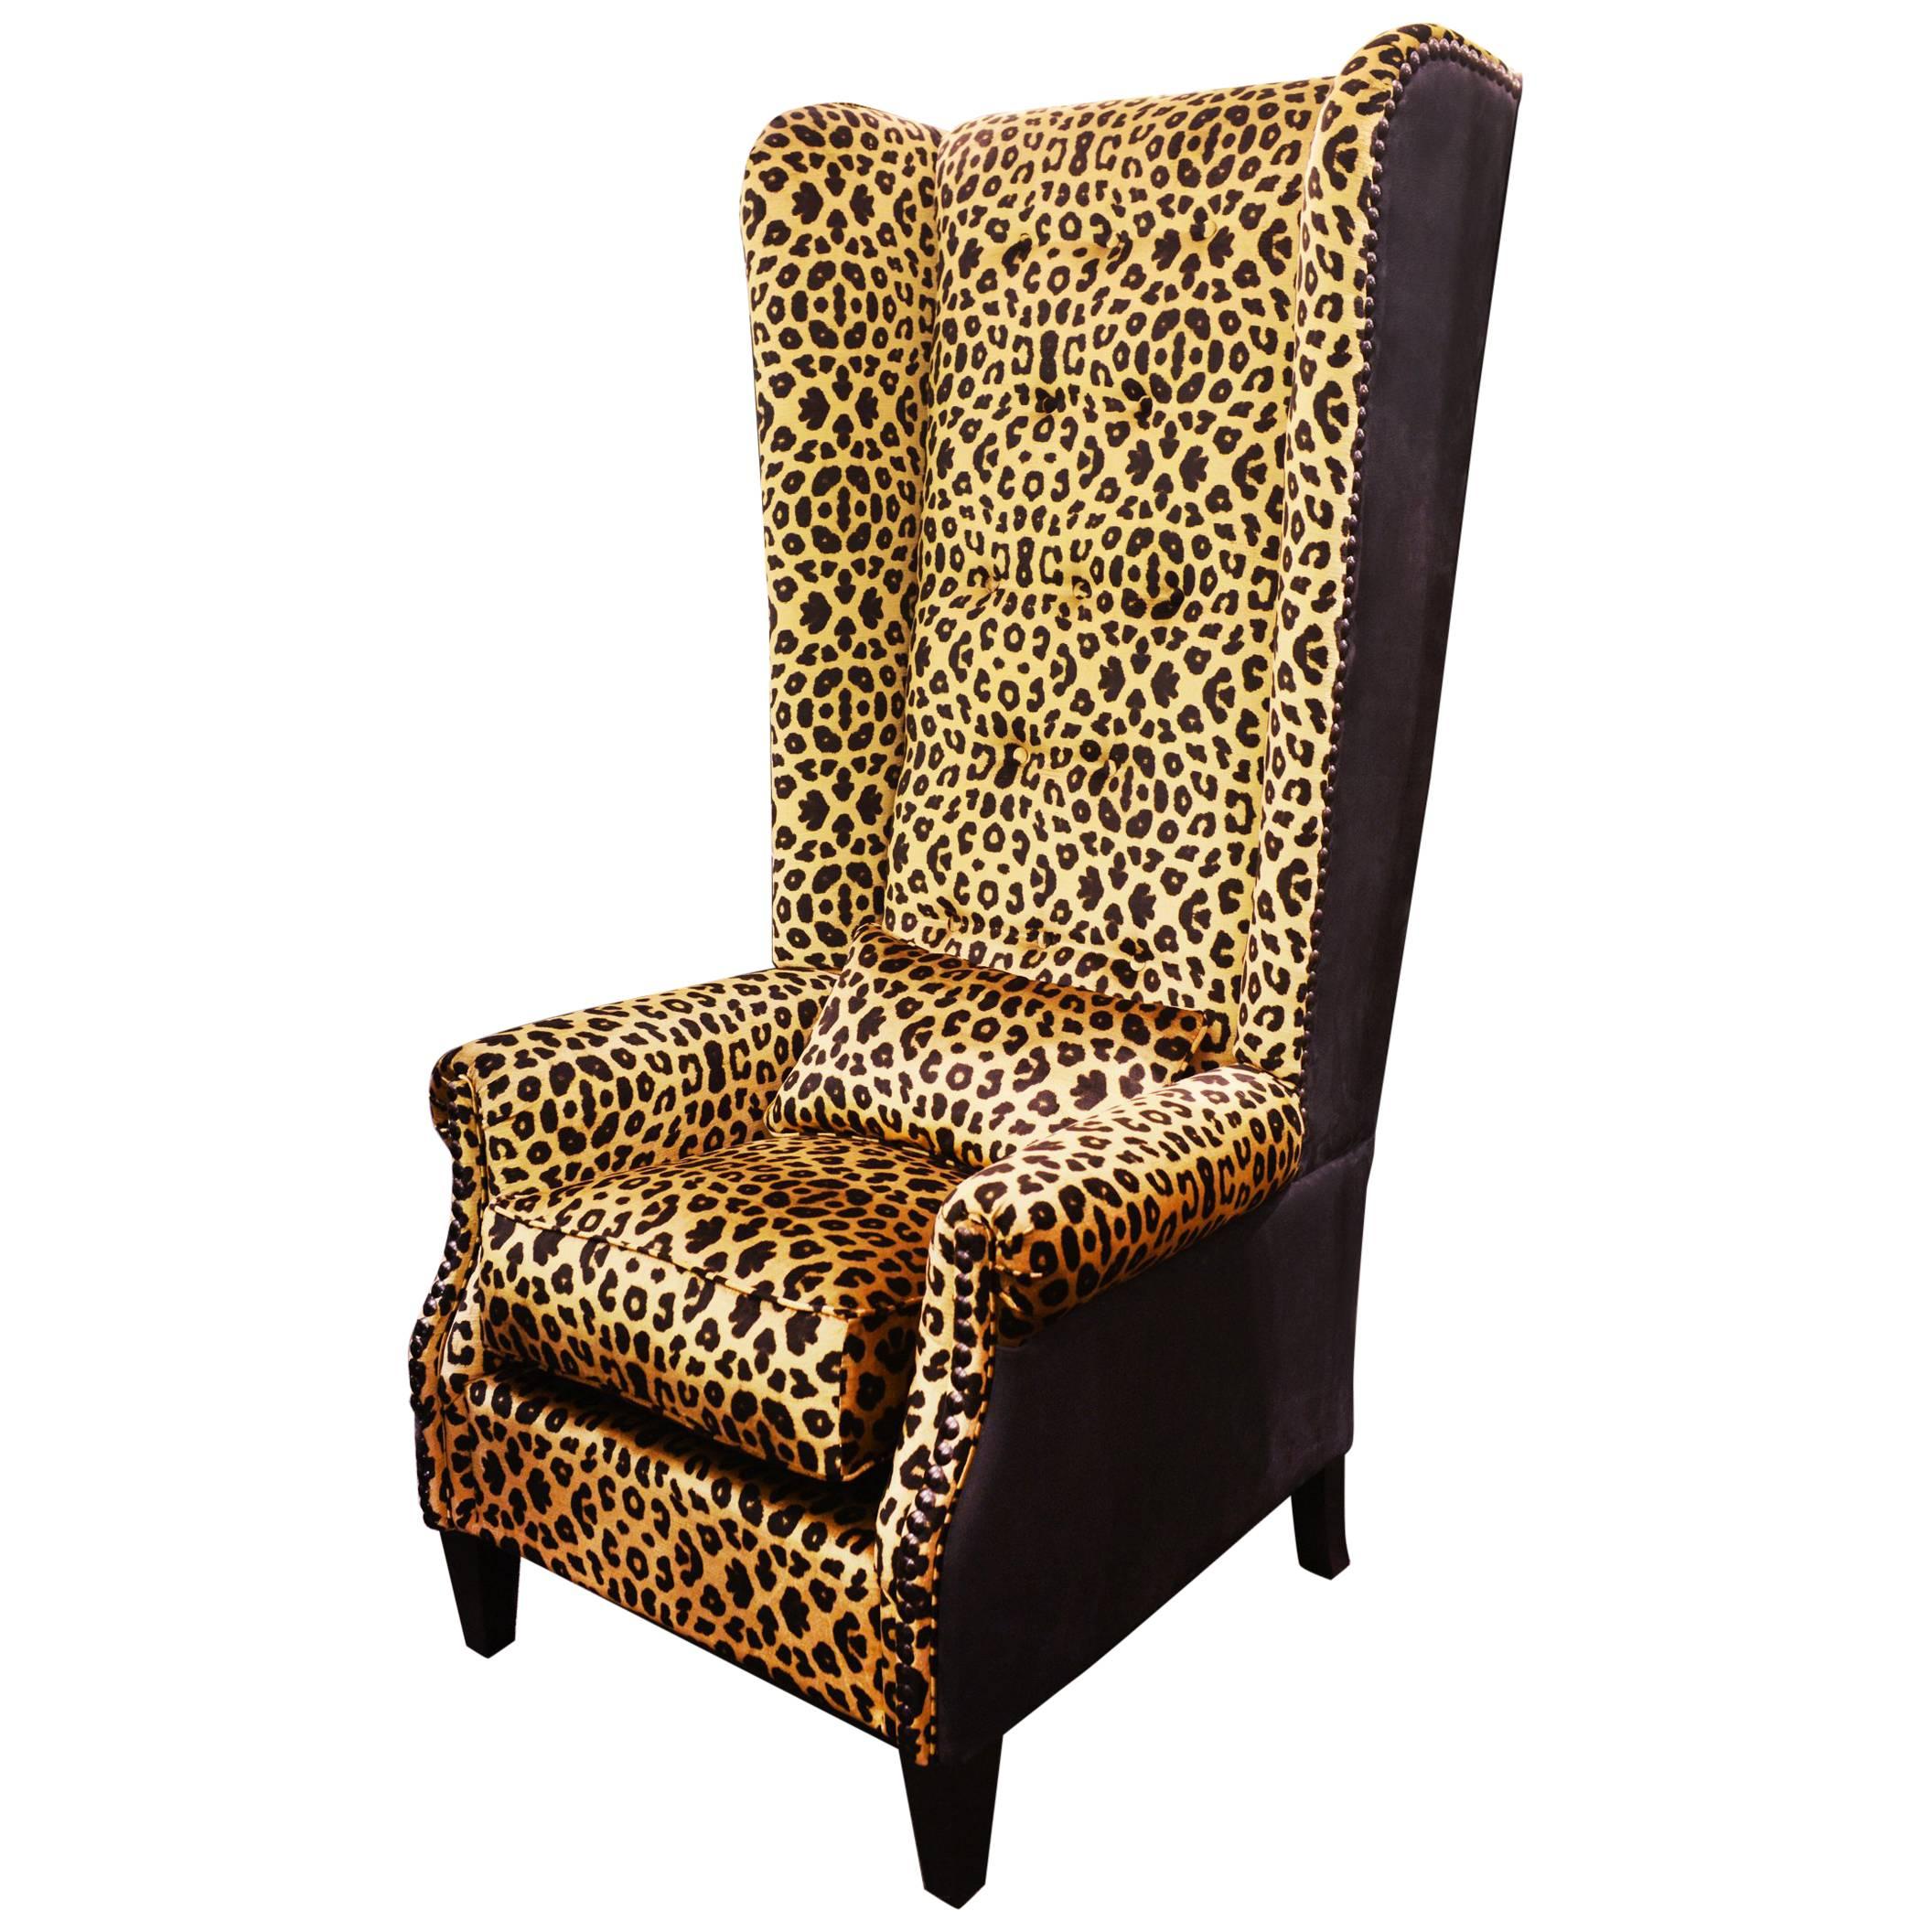 Leopard-Sessel mit schwarzem Nubuk-Leder und Samtstoff